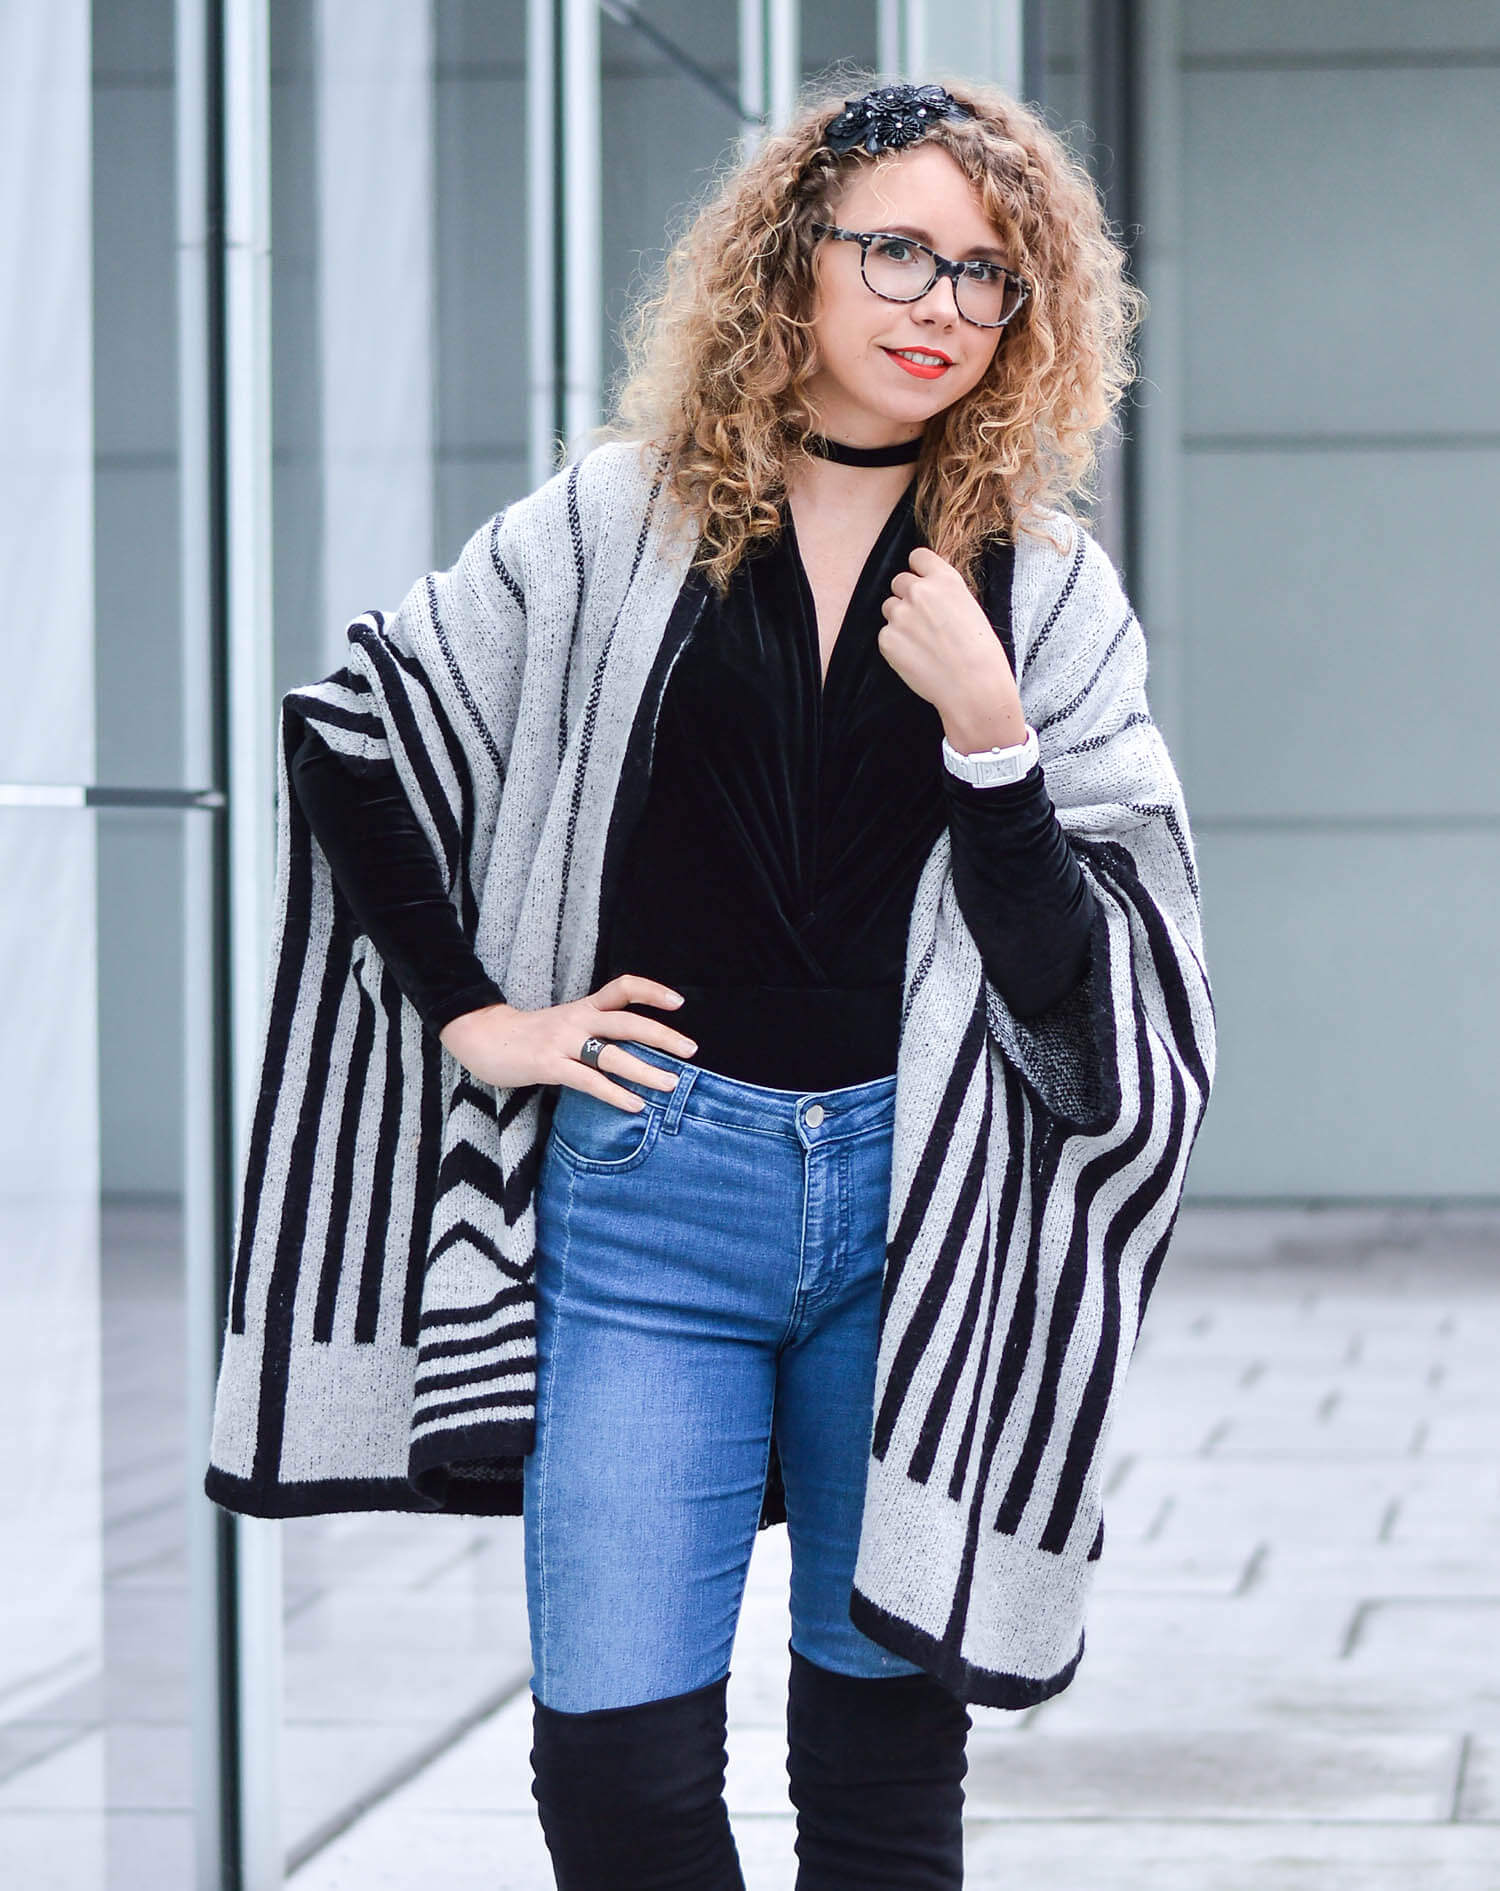 Kationette Fashionblog Outfit: Velvet Bodysuit, Overknees and Zara Cape Streetstyle Curls